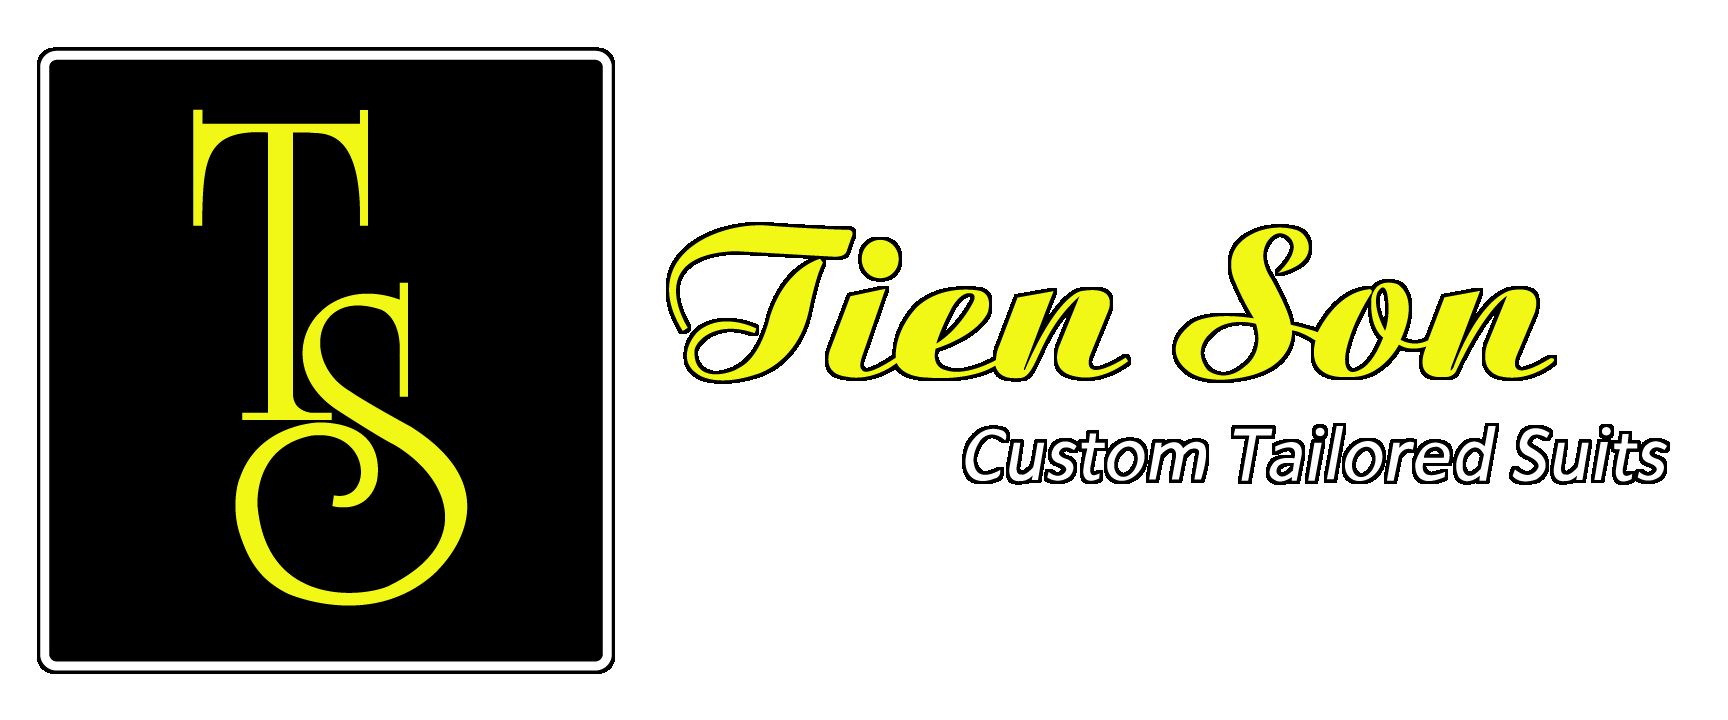 TS Custom Tailored Suits logo